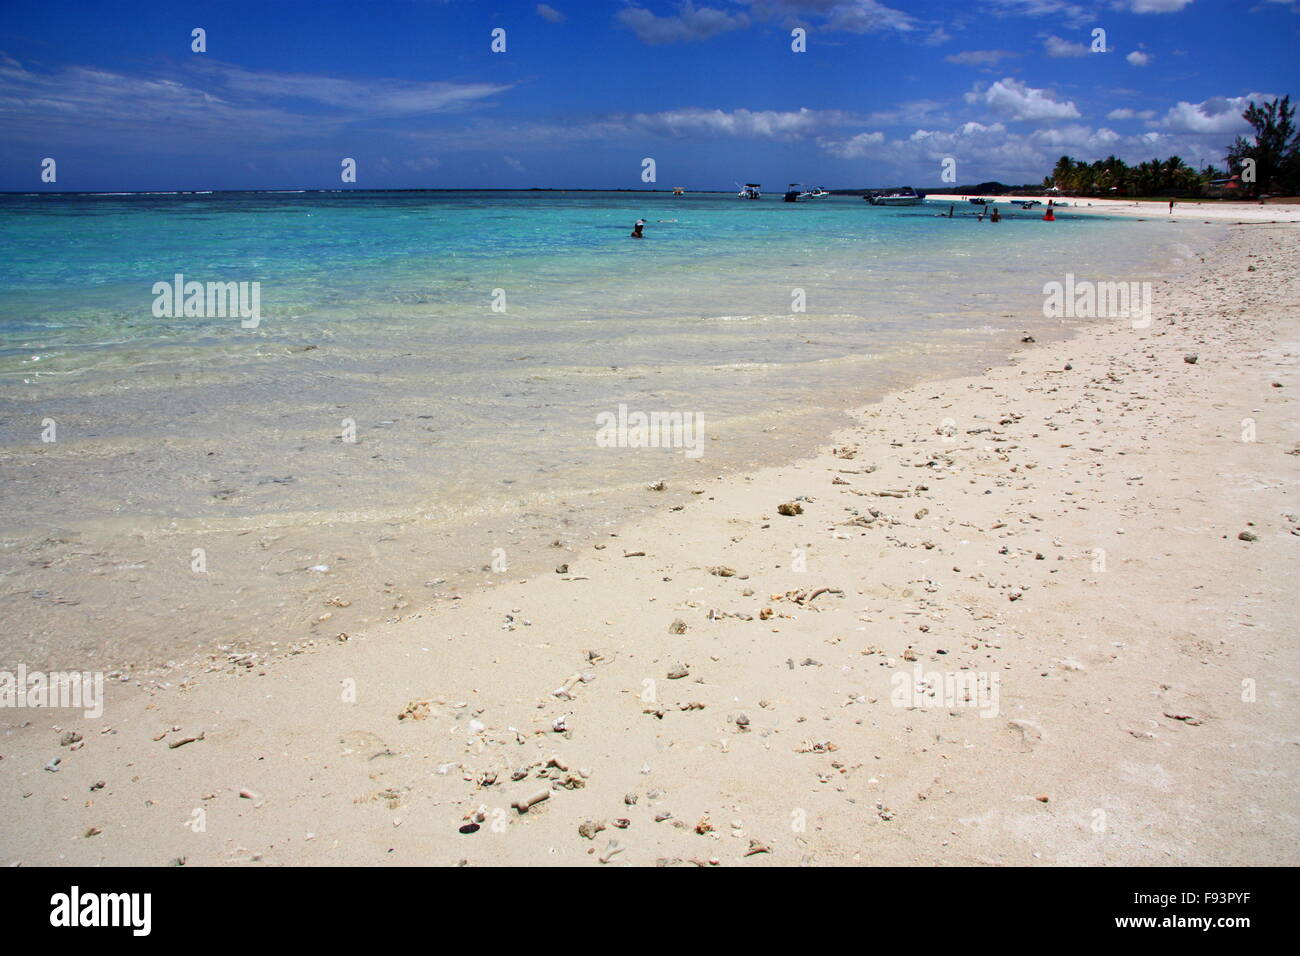 Beautiful beach in the Indian Ocean Stock Photo